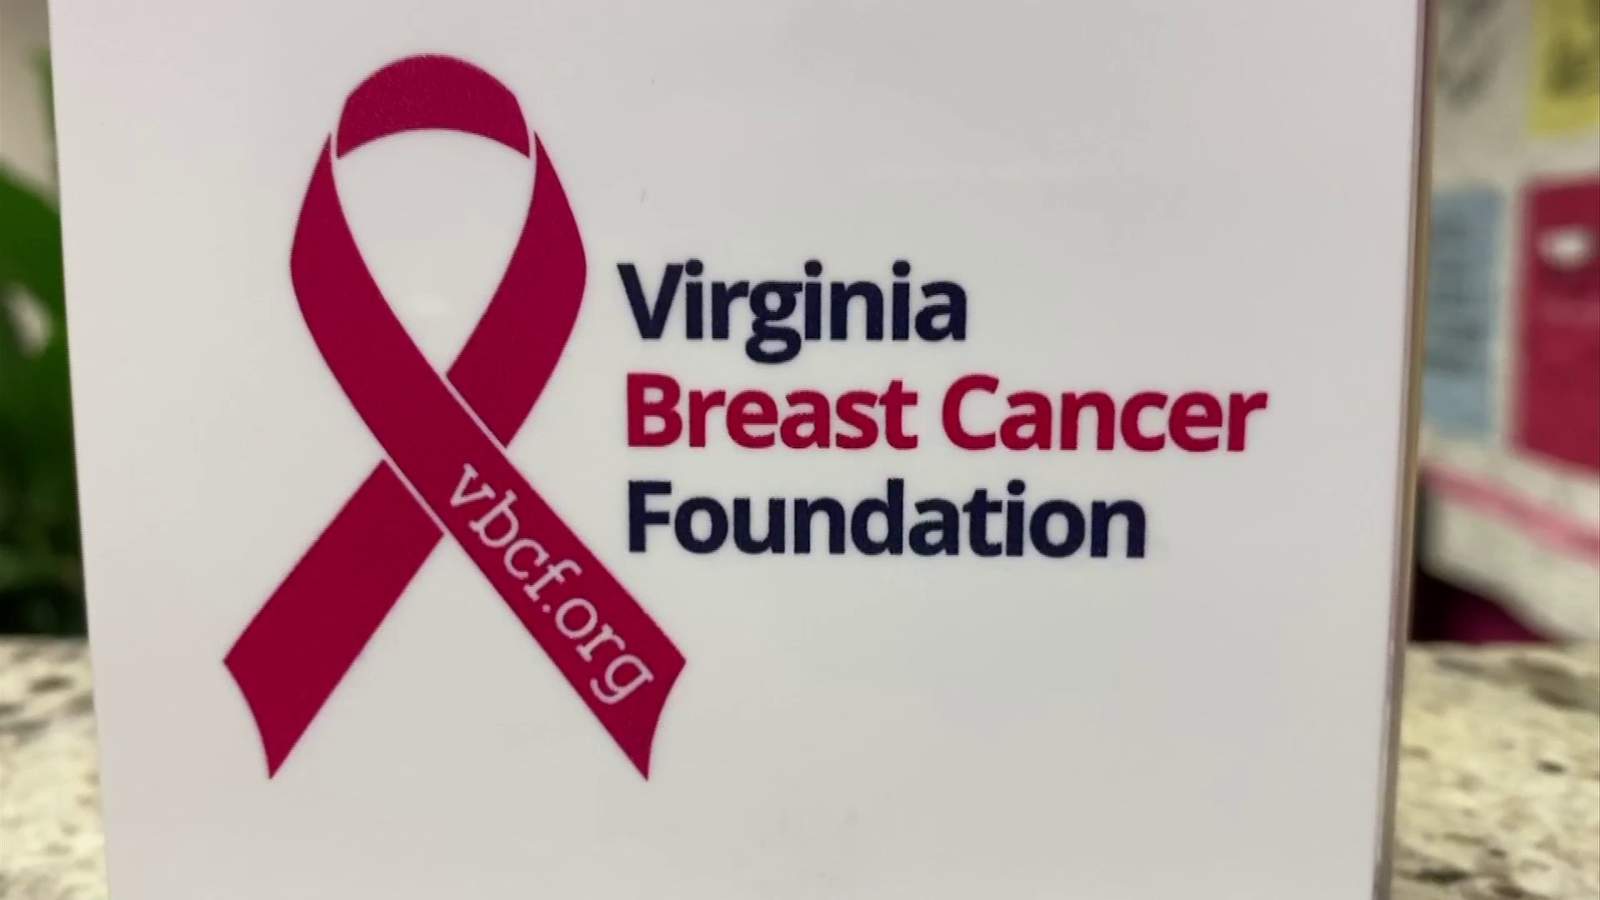 Virginia Breast Cancer Foundation offering webinars to educate women